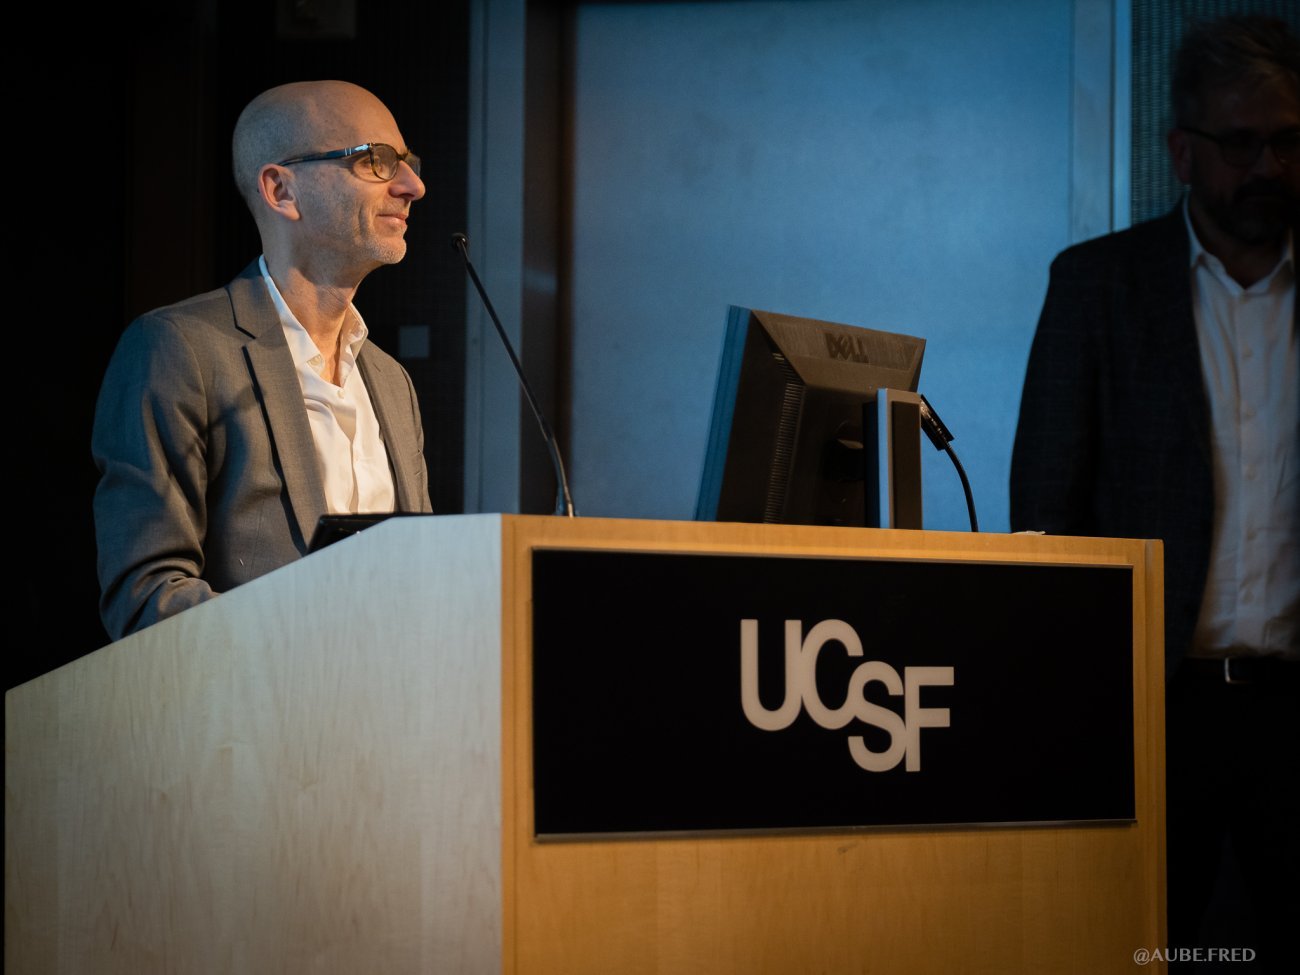  Olivier Schwartz presenting at Symposium in genentech hall UCSF